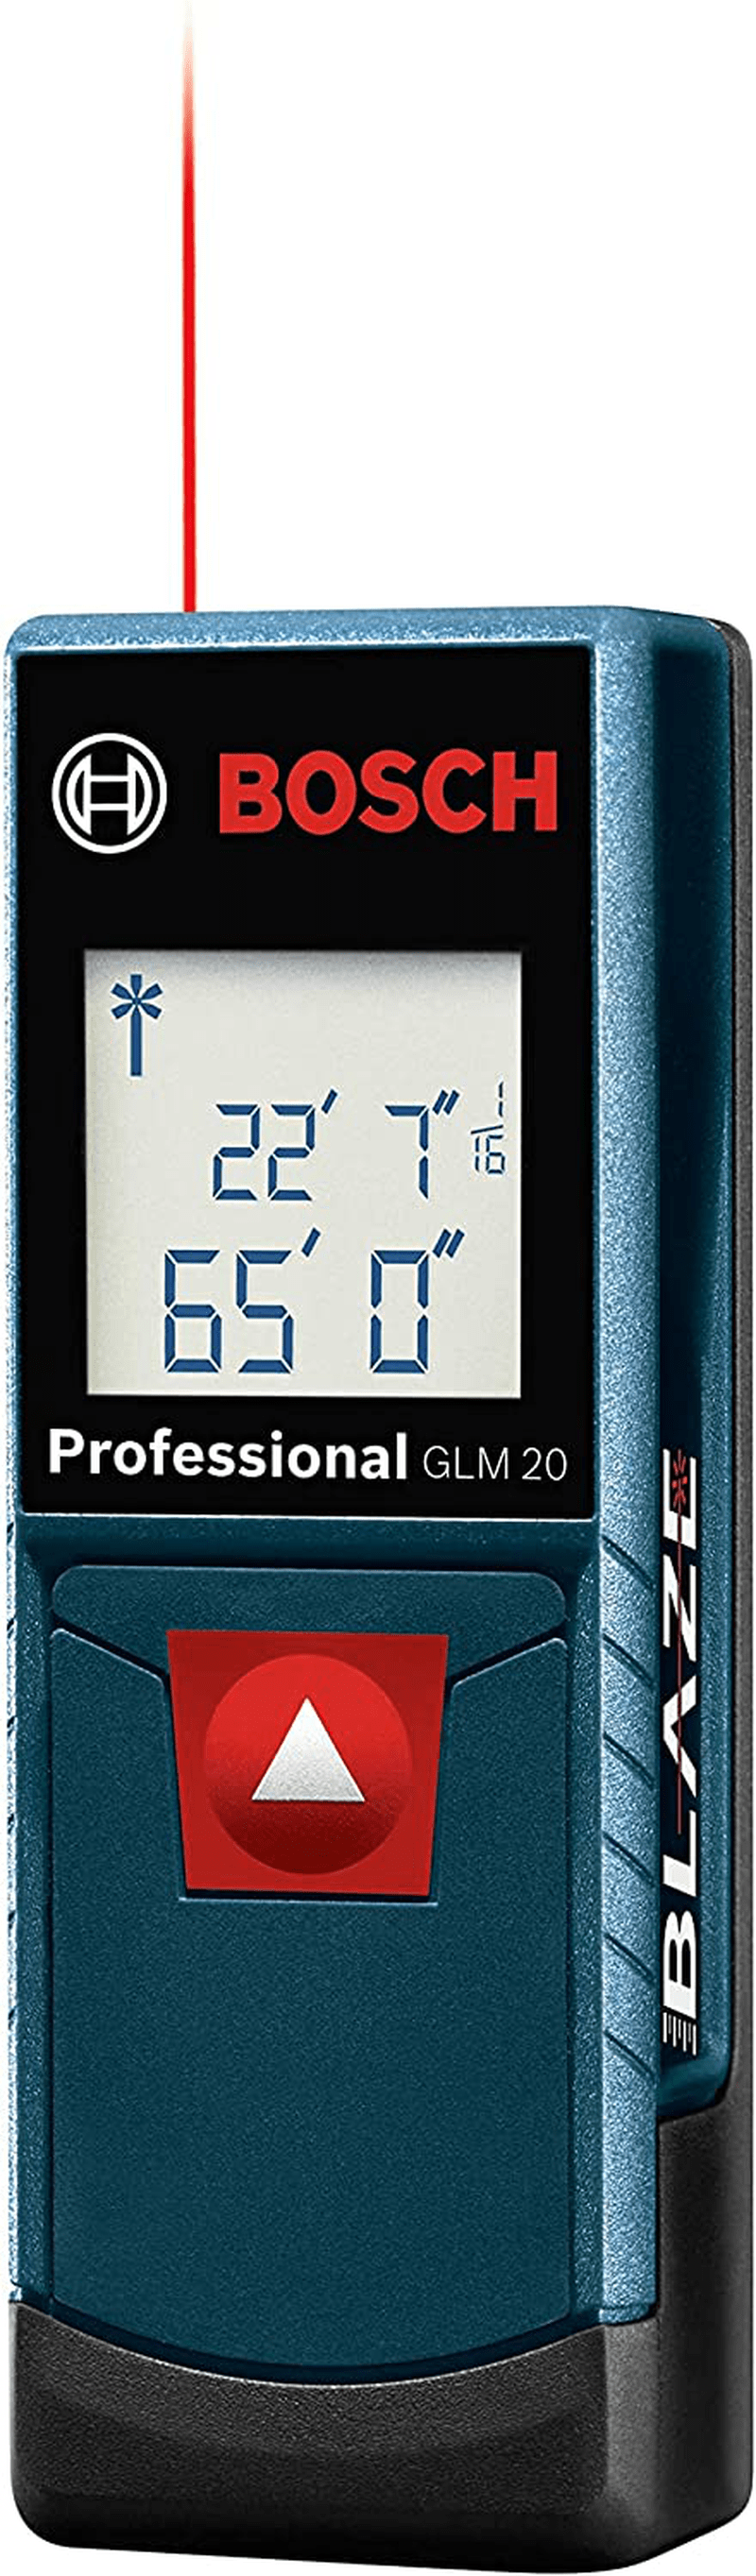 Bosch GLM20 Blaze 65ft Laser Distance Measure With Real Time Measuring Hardware > Tools > Measuring Tools & Sensors BOSCH Default Title  